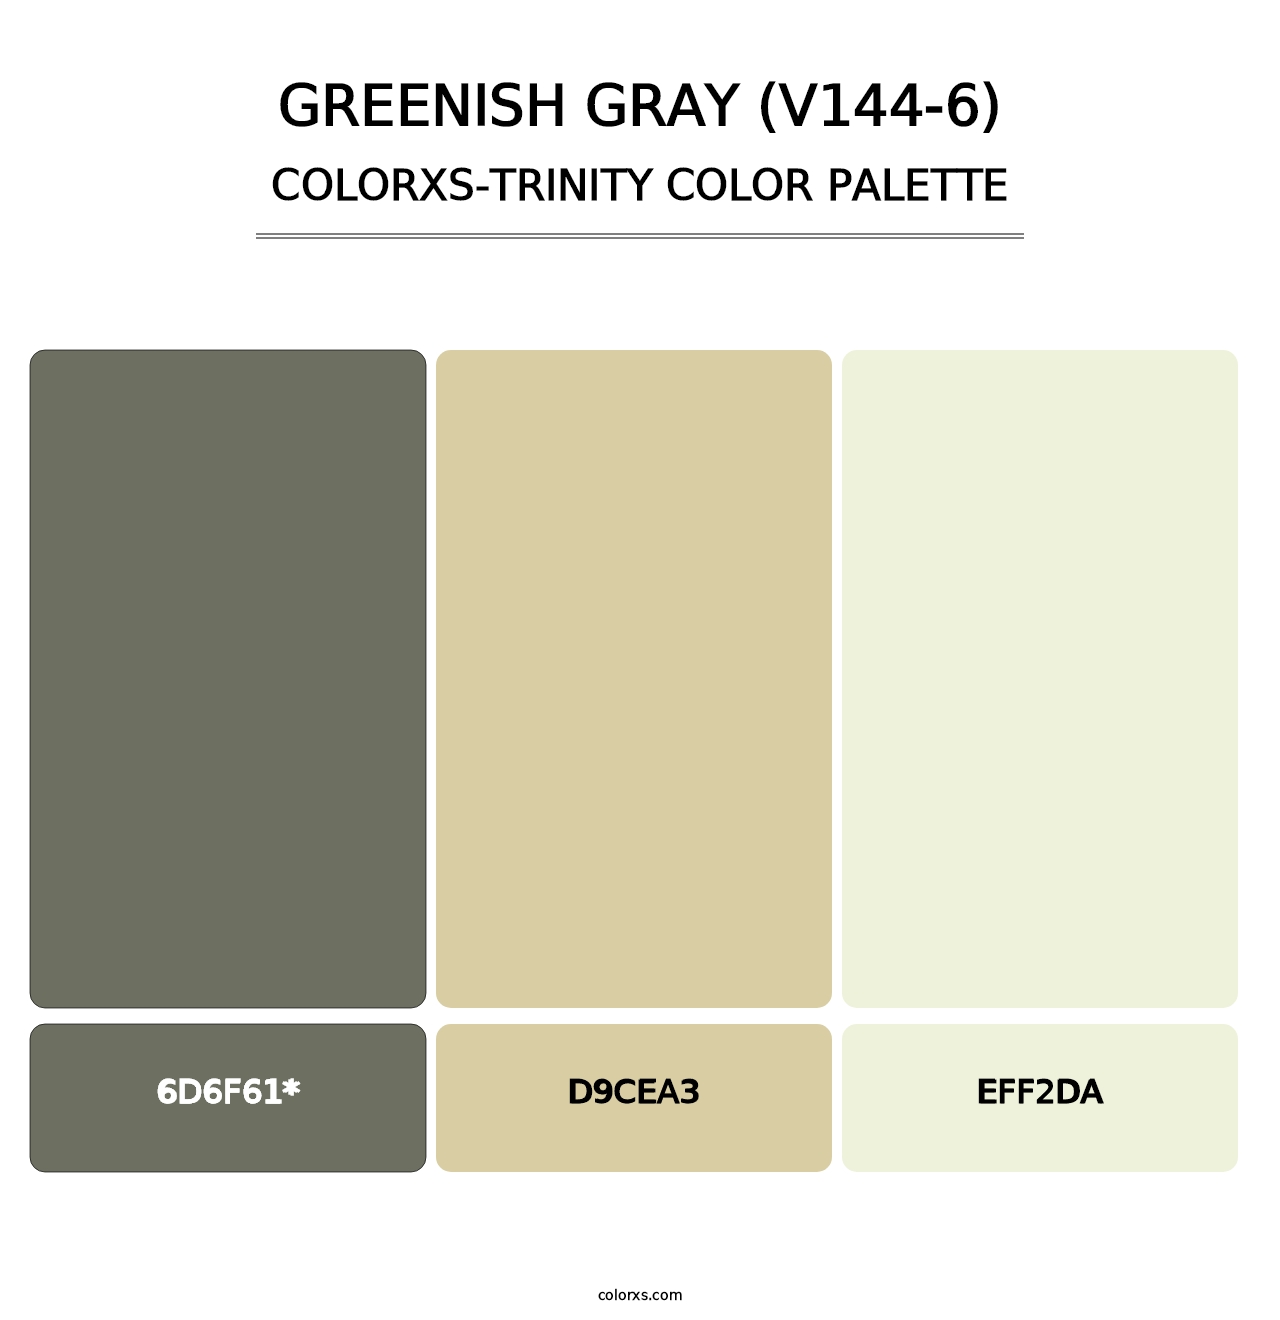 Greenish Gray (V144-6) - Colorxs Trinity Palette